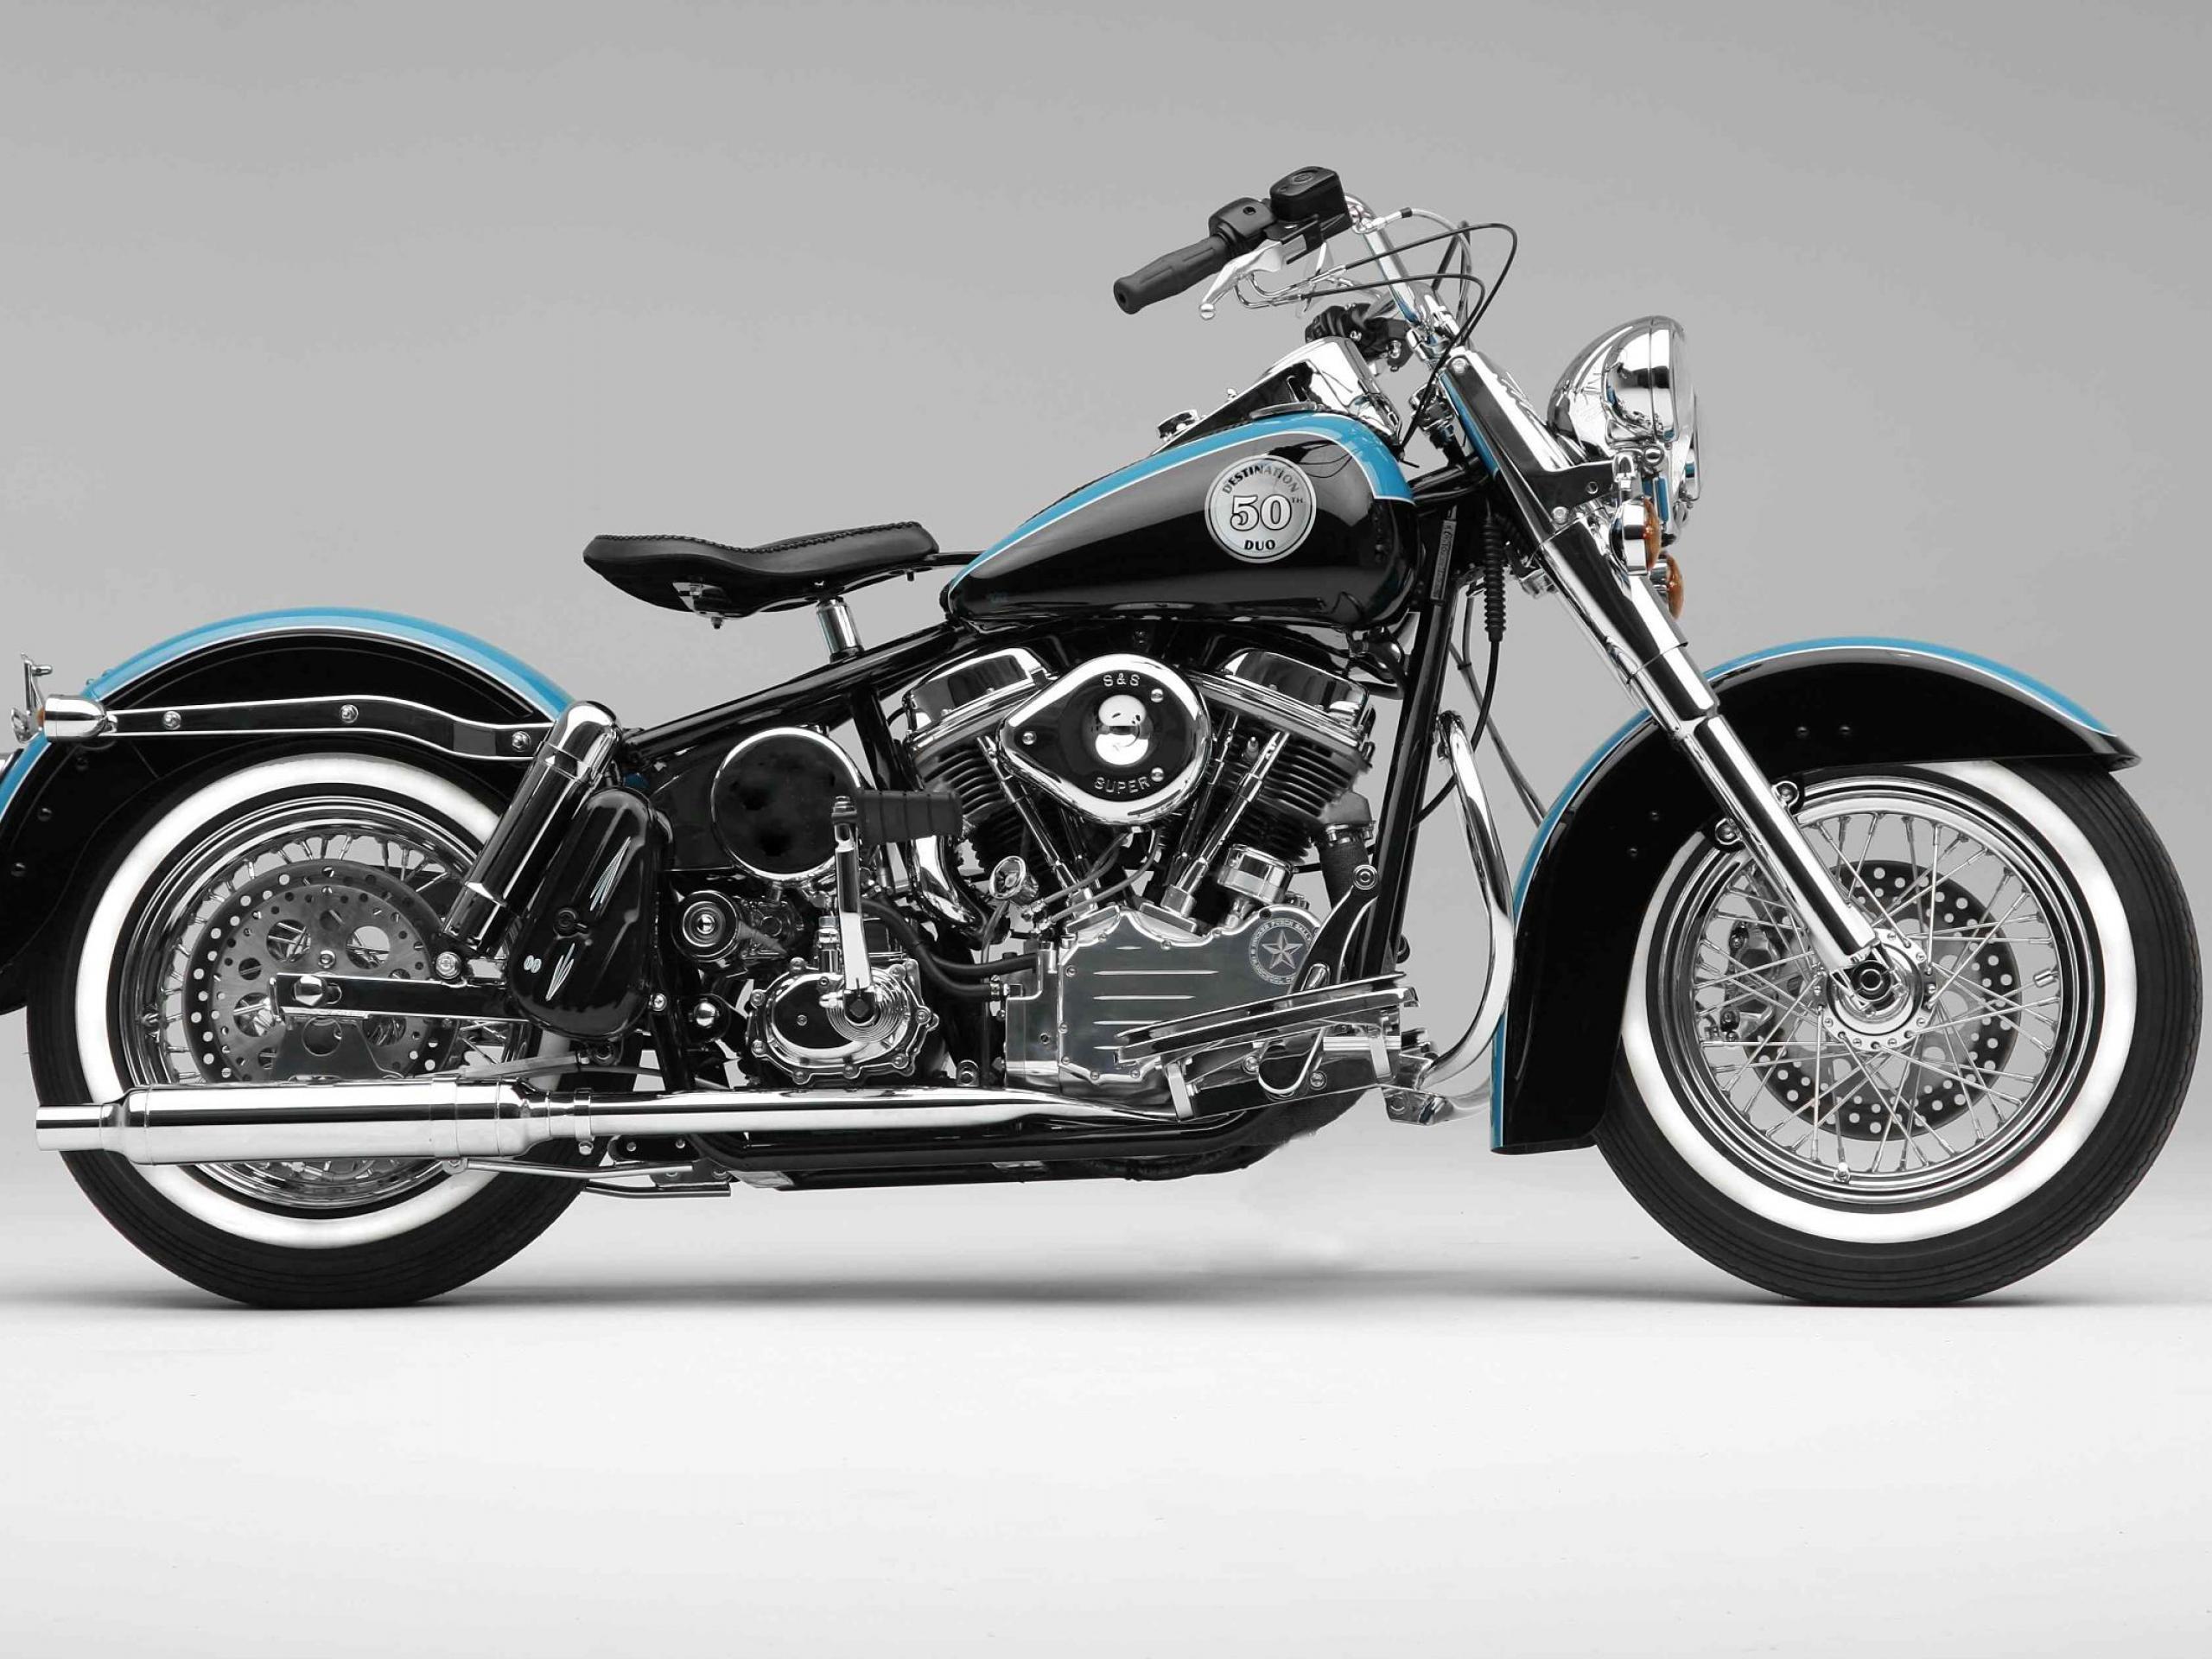 Fonds d&;écran Harley Davidson, tous les wallpaper Harley Davidson